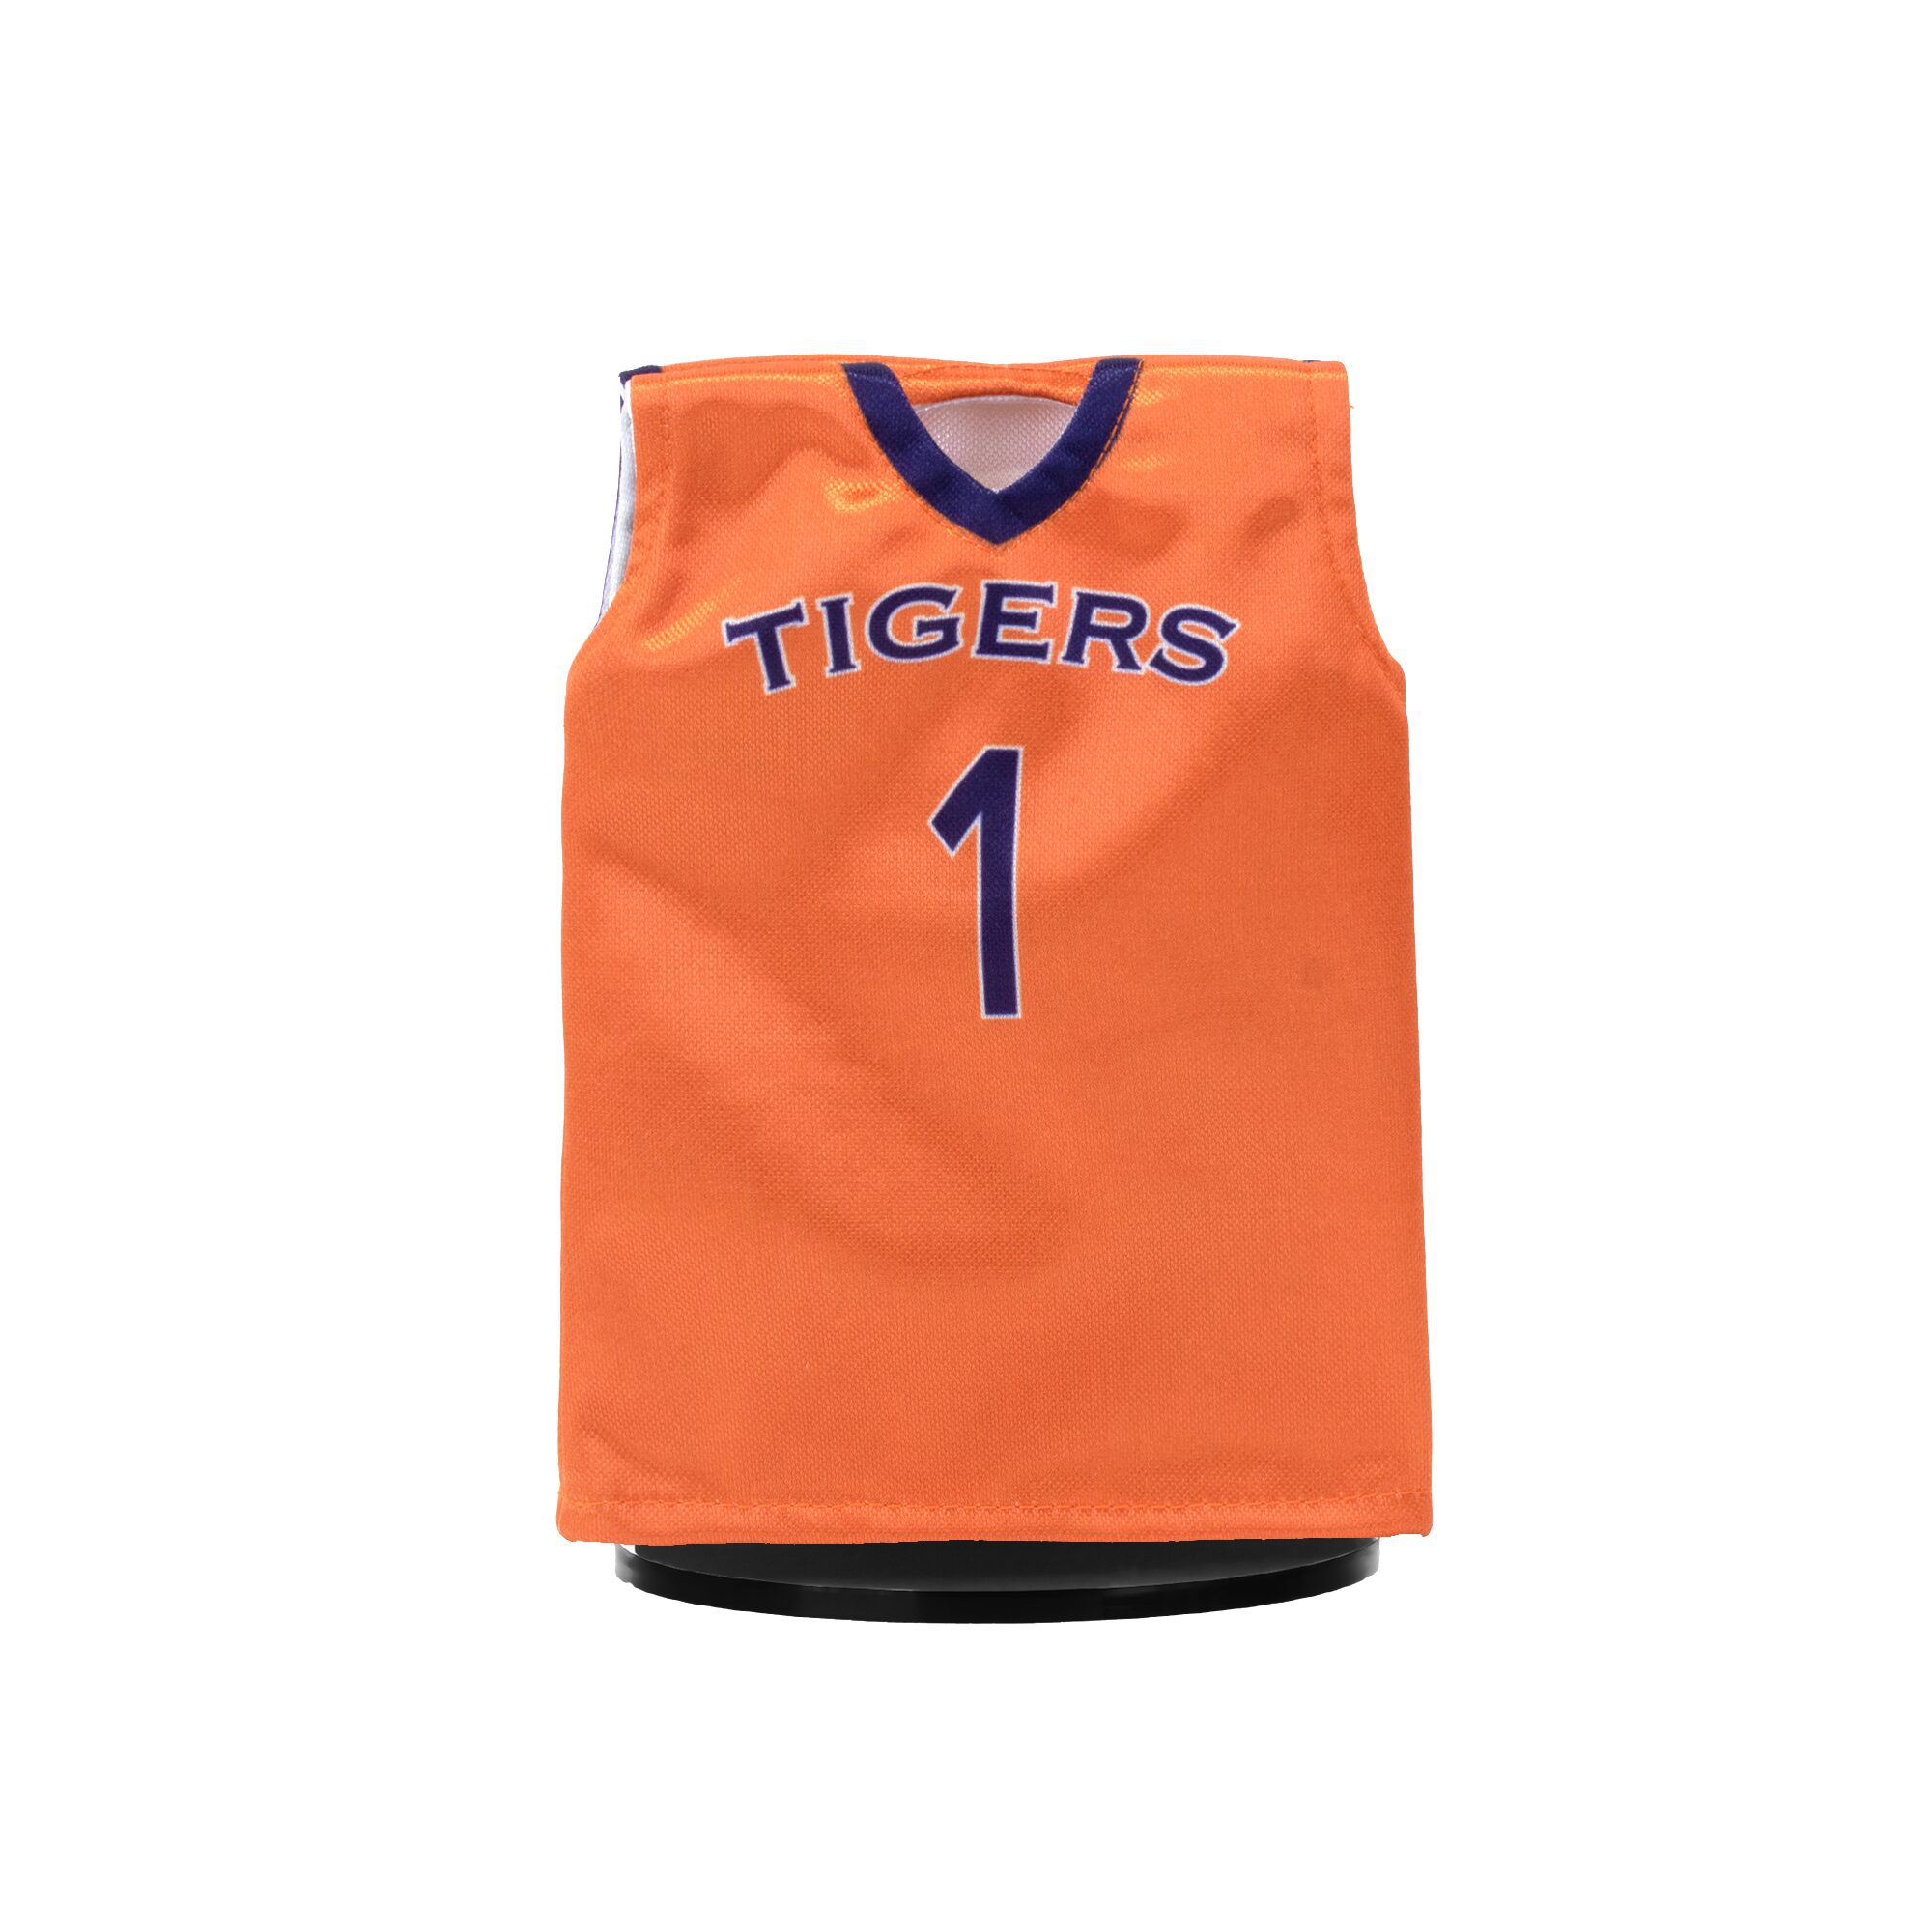 Auburn Basketball Miniature Orange Jersey